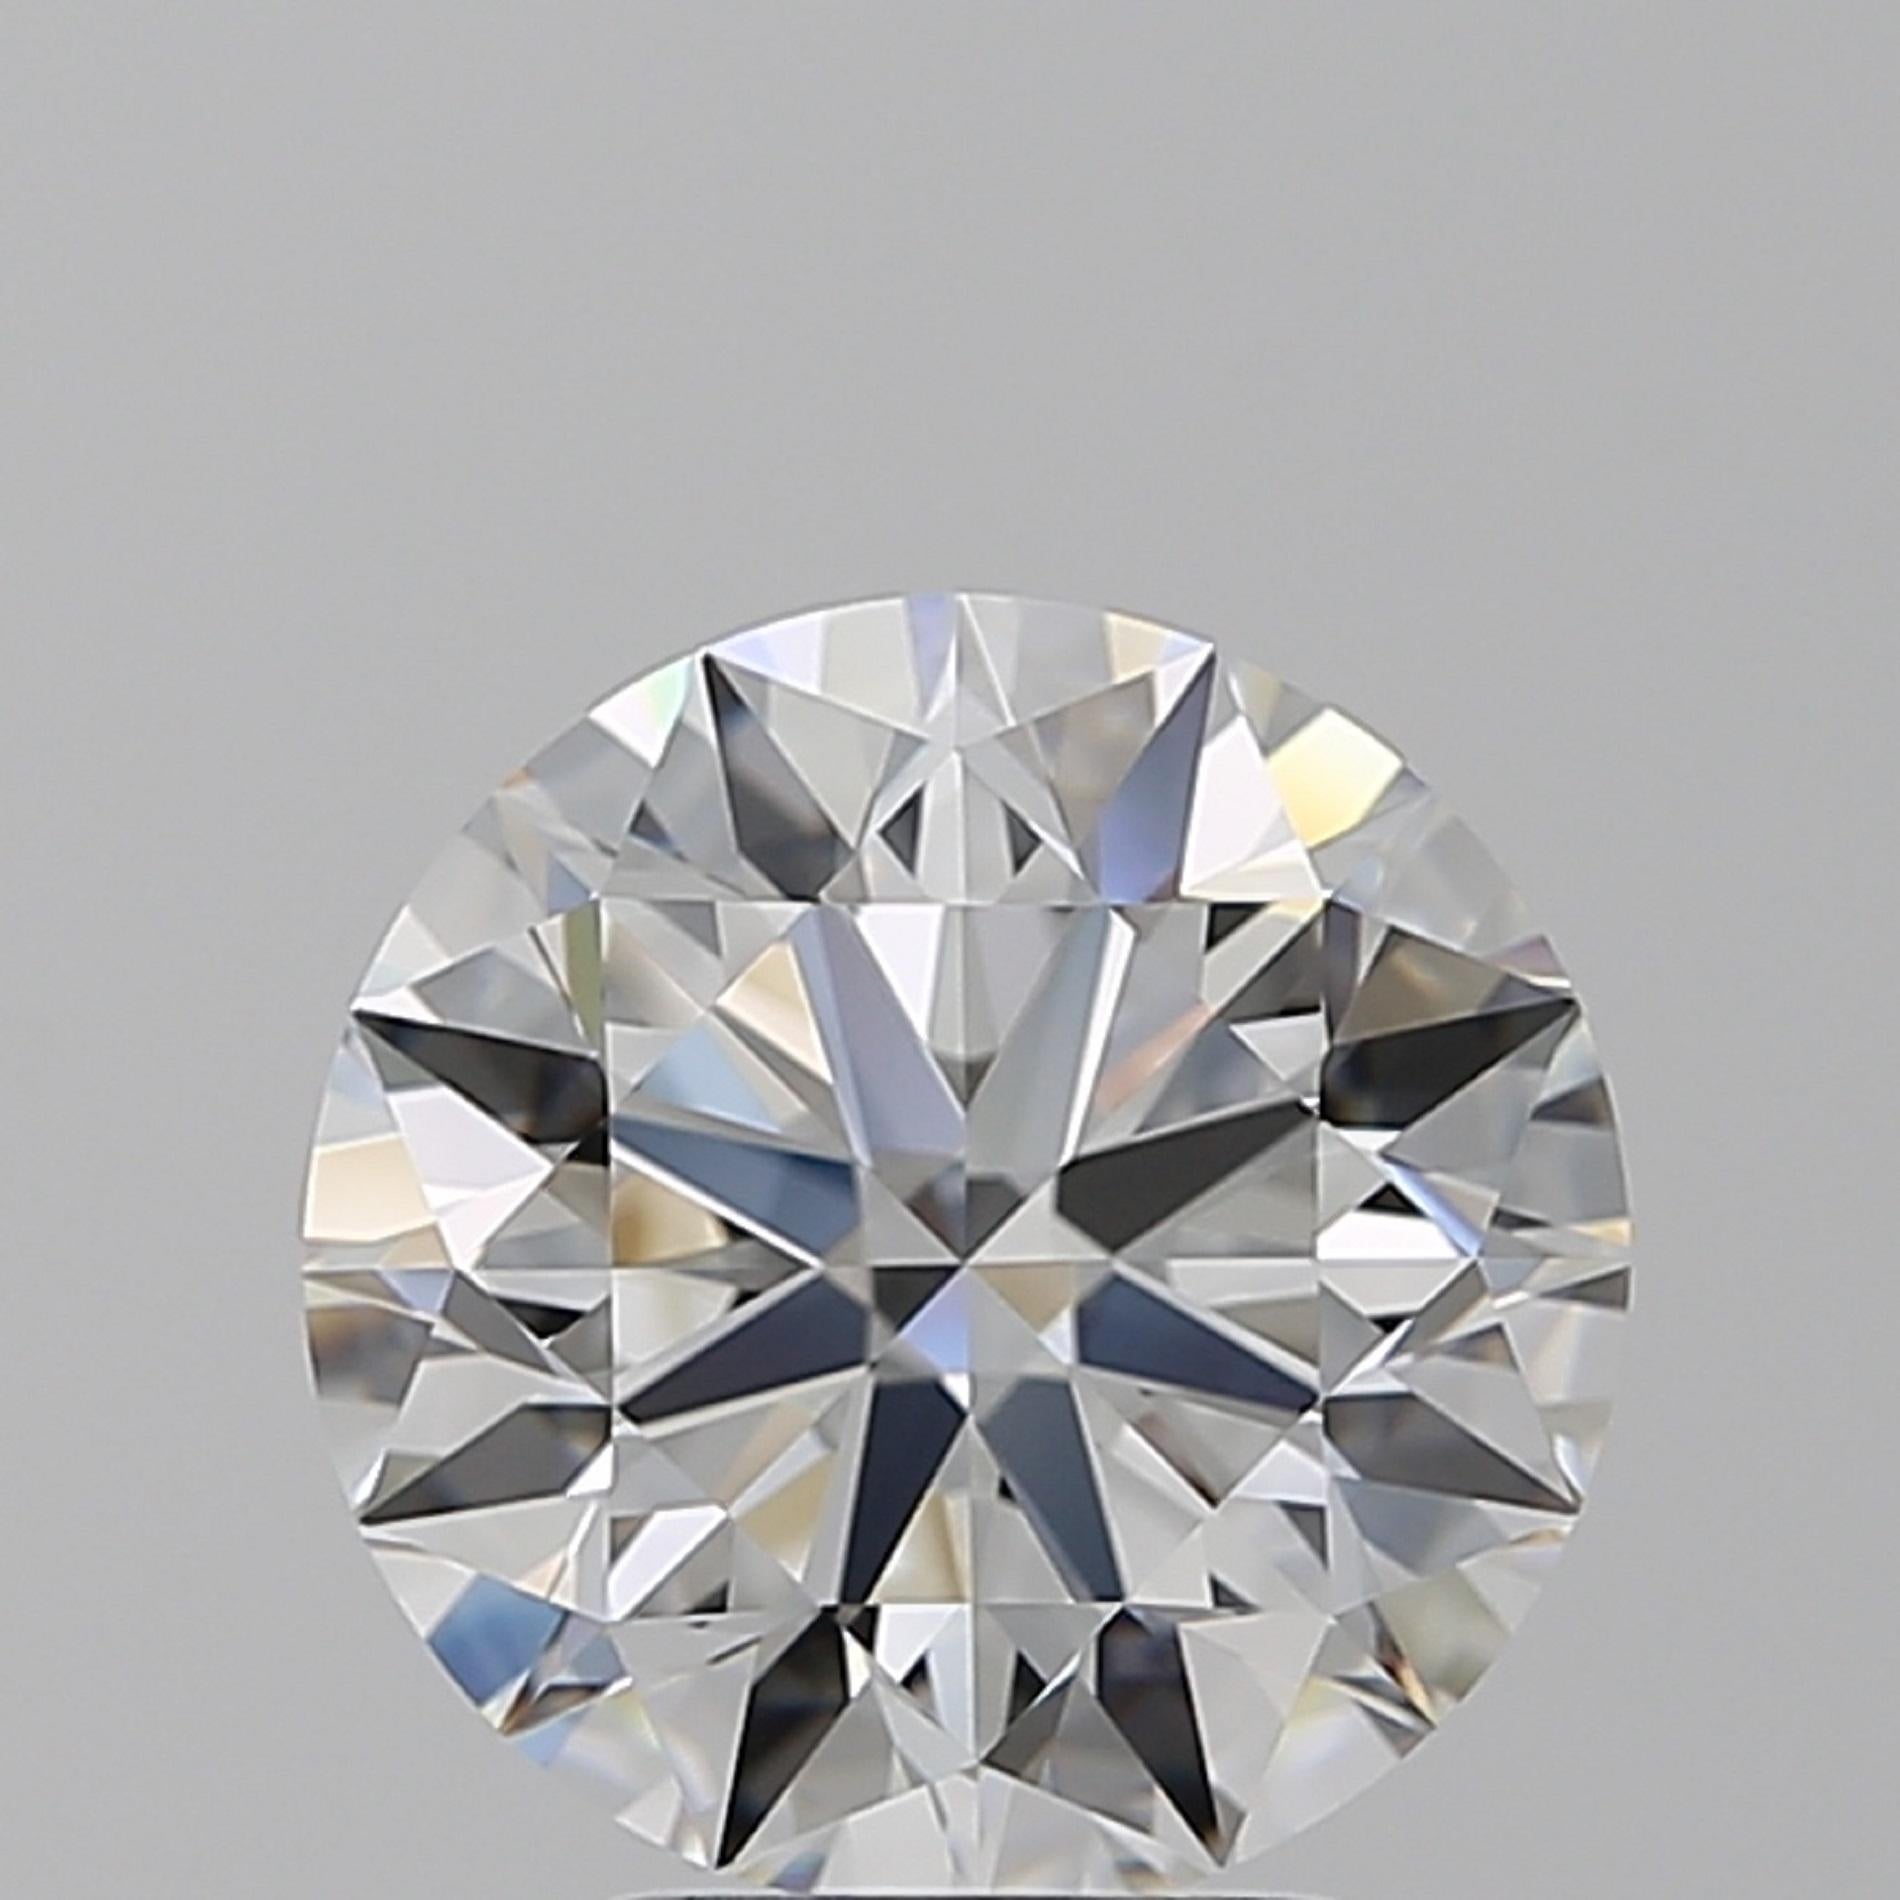 An amazing pair of round brilliant cut diamonds set in solid platinum
F/E color
VVS clarity
None fluorescence 